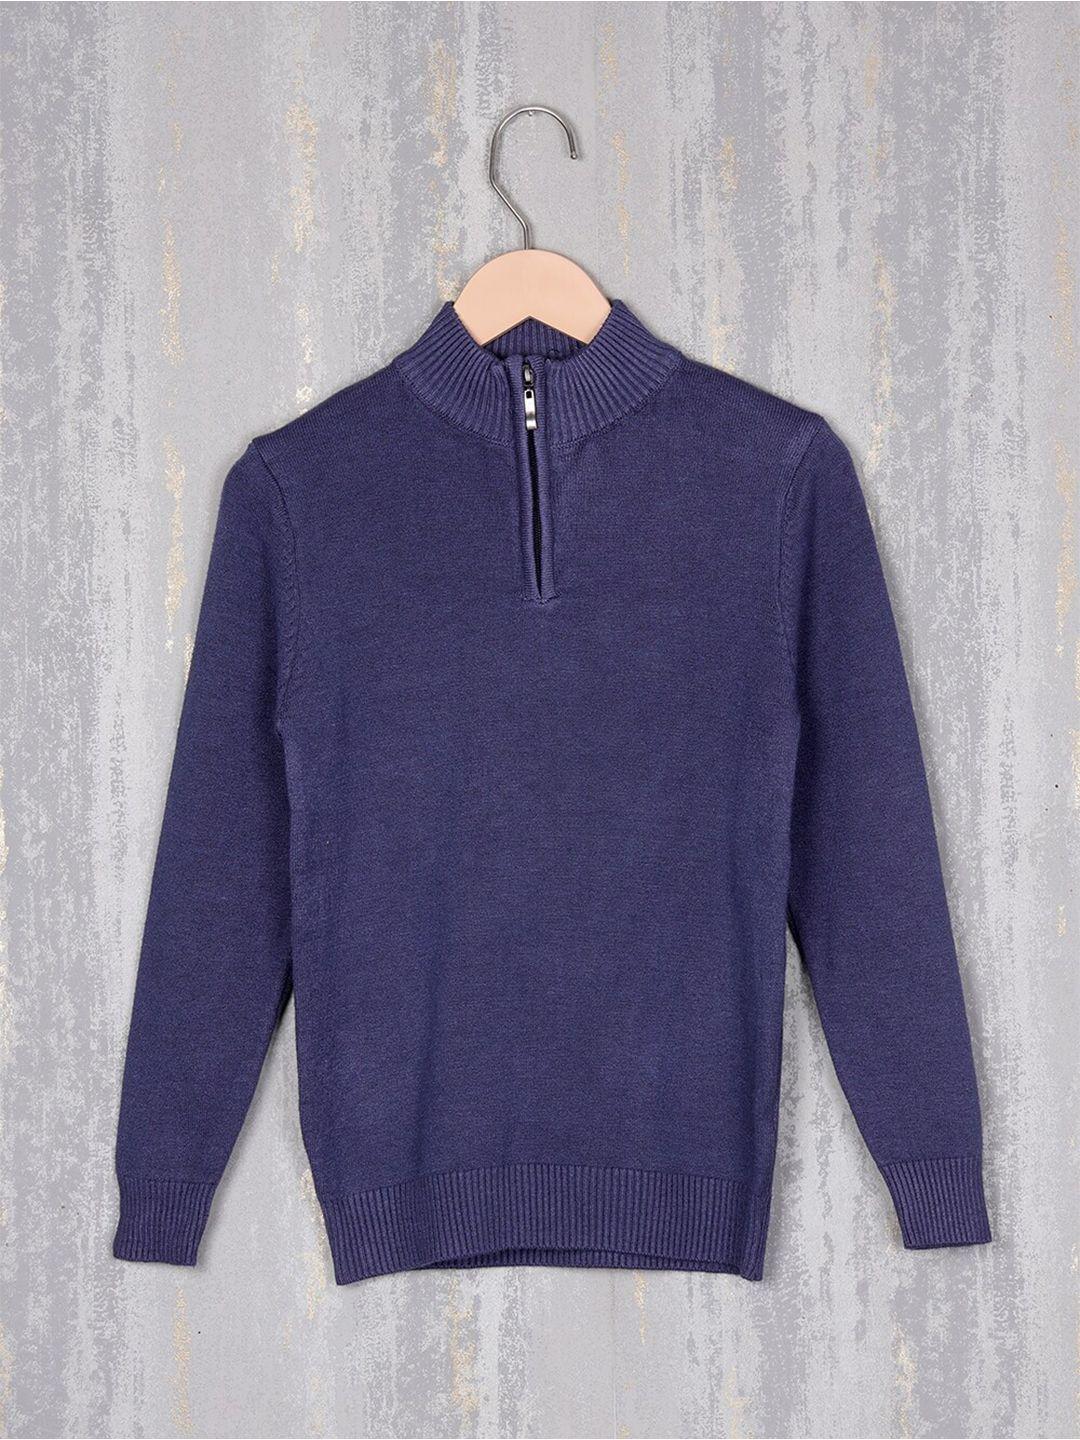 albion-boys-mock-collar-woollen-pullover-sweater